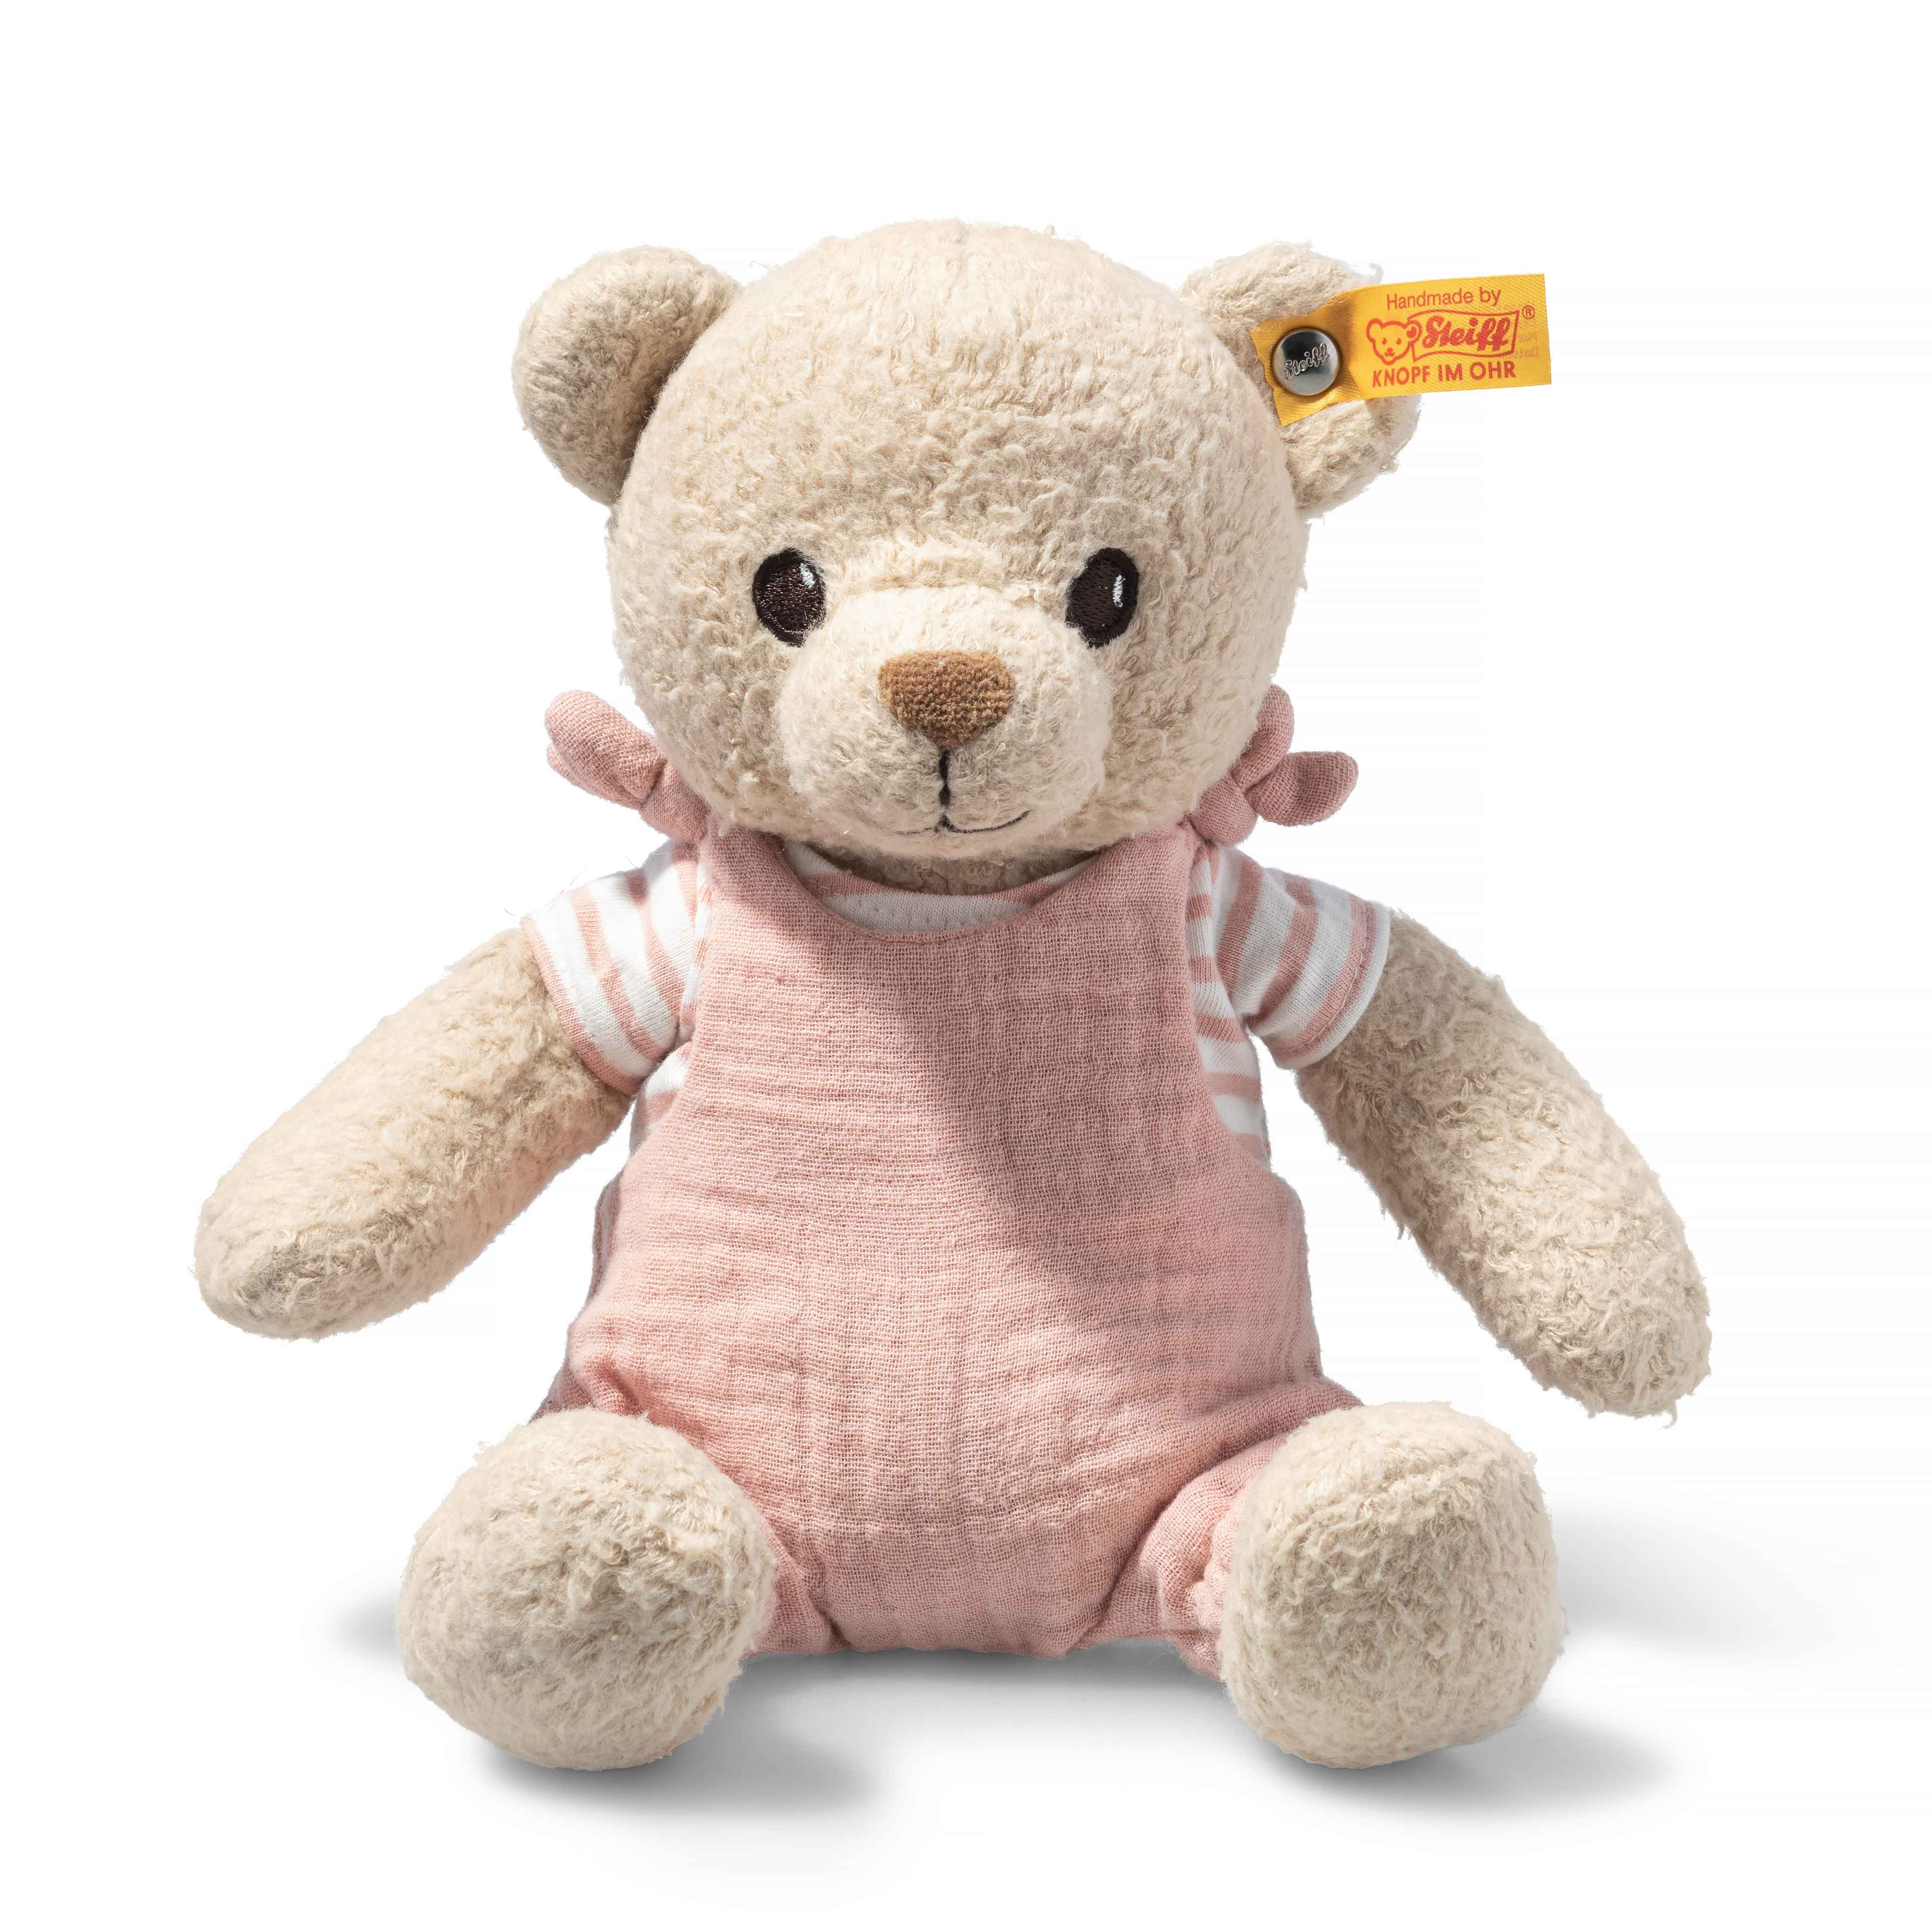 GOTS Nele Teddybär 26 cm beige/rosa sitzend